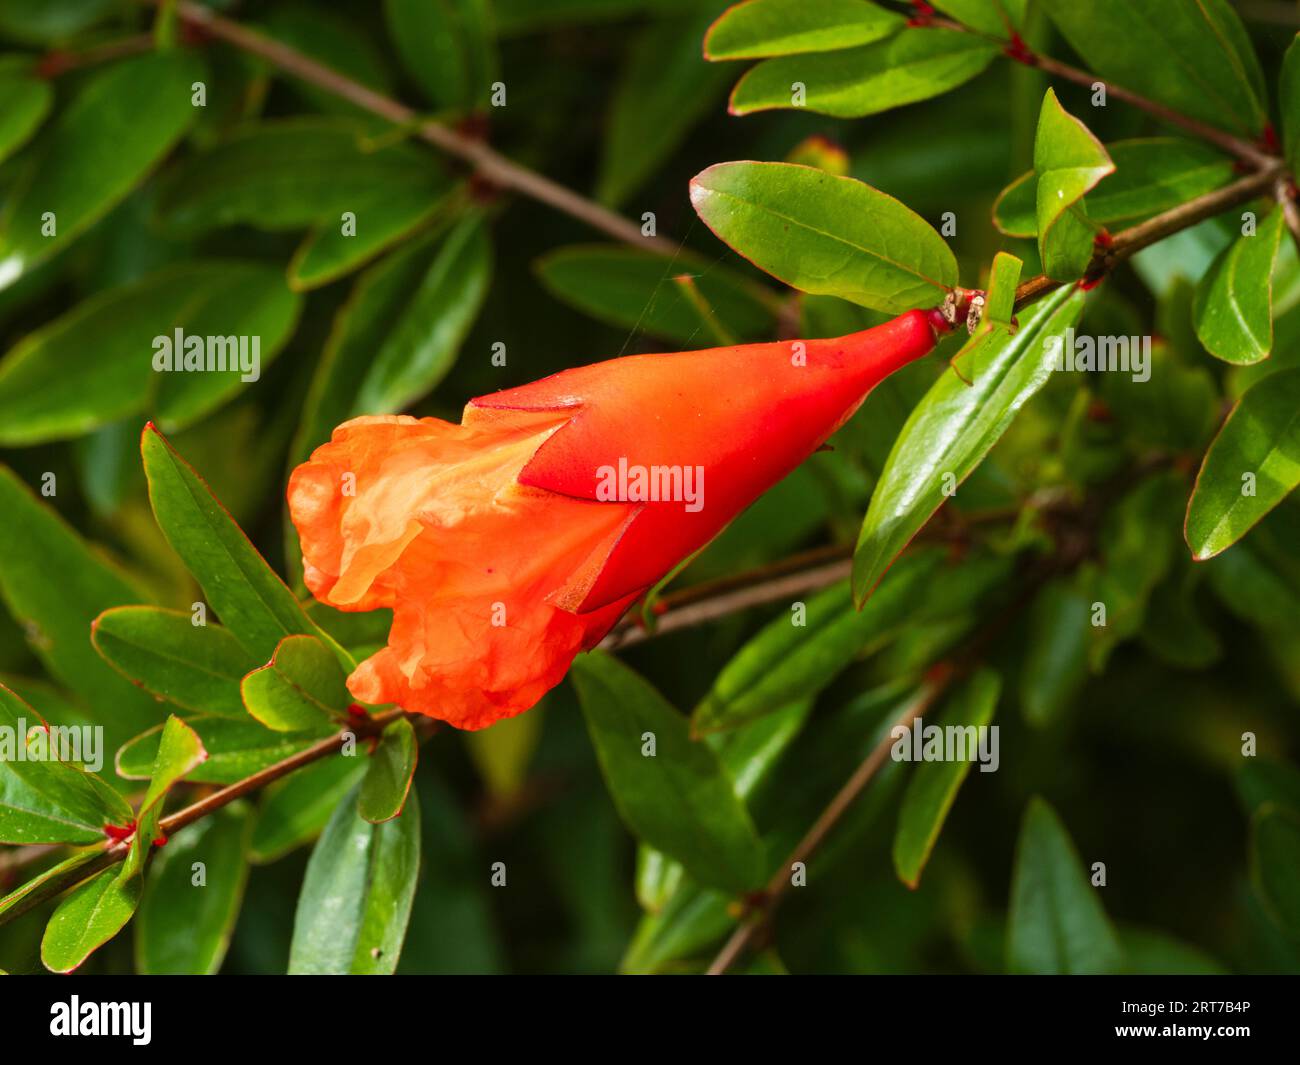 Red-orange flowers of the half-hardy deciduous pomegranate shrub, Punica granatum Stock Photo